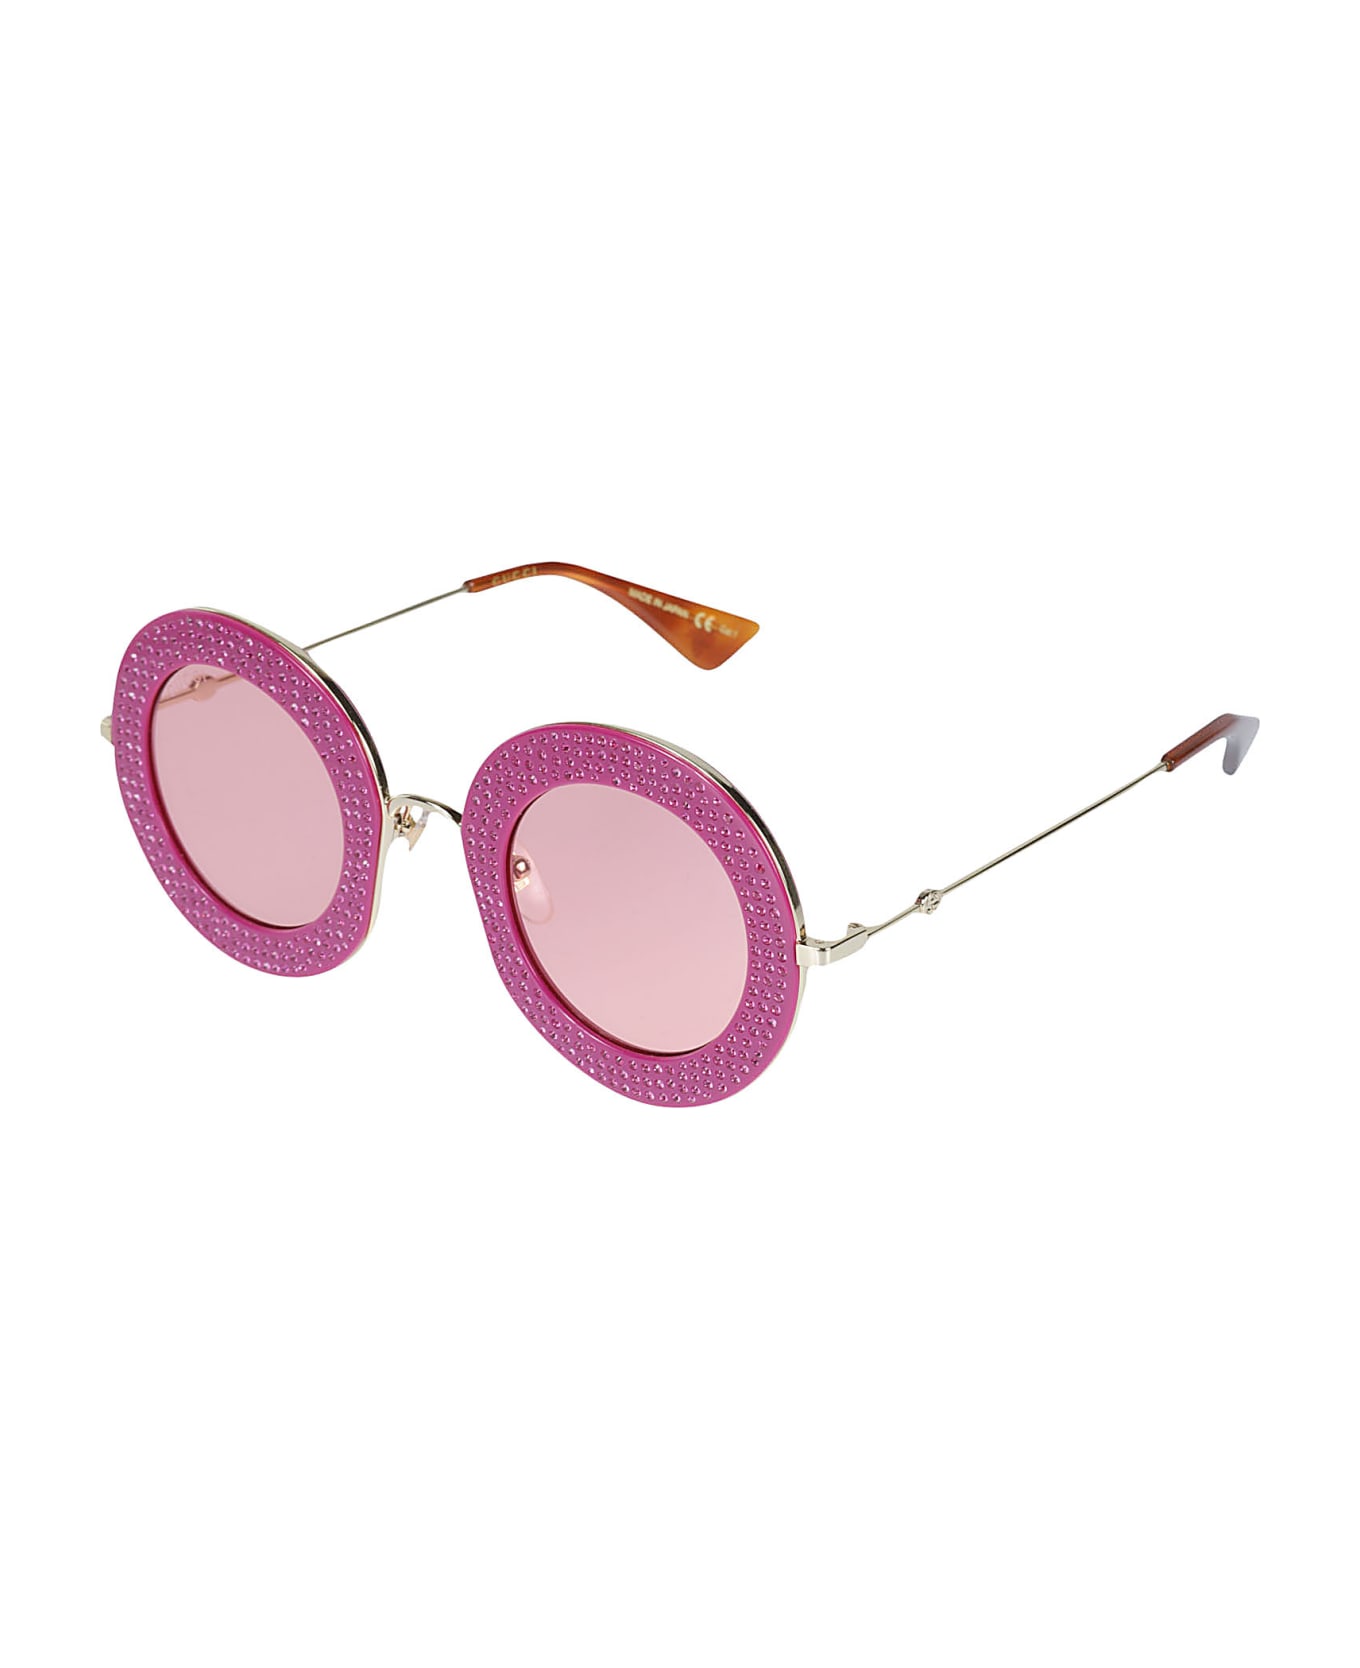 Gucci Eyewear Embellished Round Sunglasses - 012 fuchsia gold pink サングラス